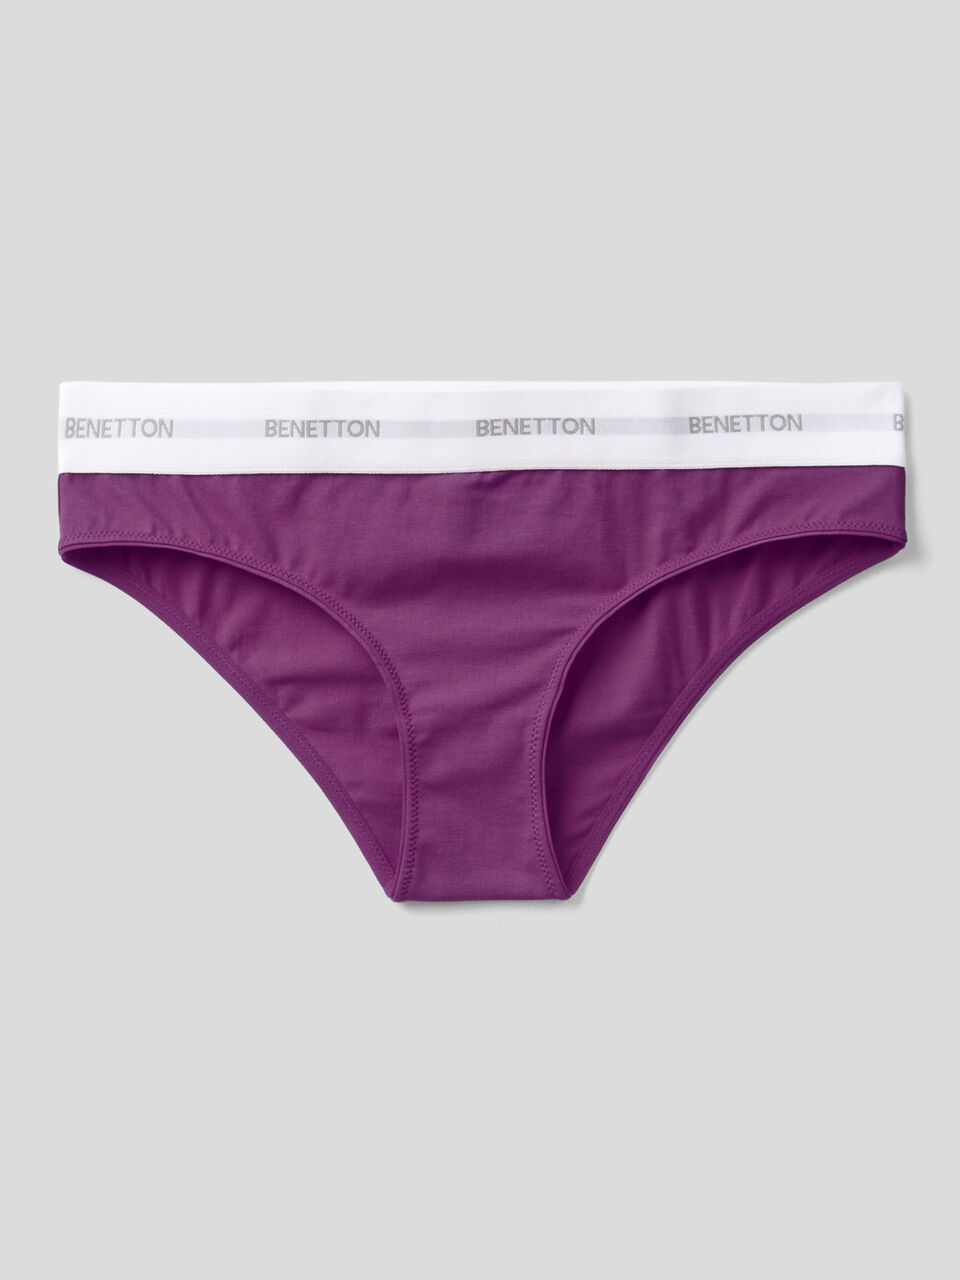 CRIVIT Performance Purple Underwear BNWT (RARE & COLLECTABLE) 4304493040434  on eBid United States | 185994276